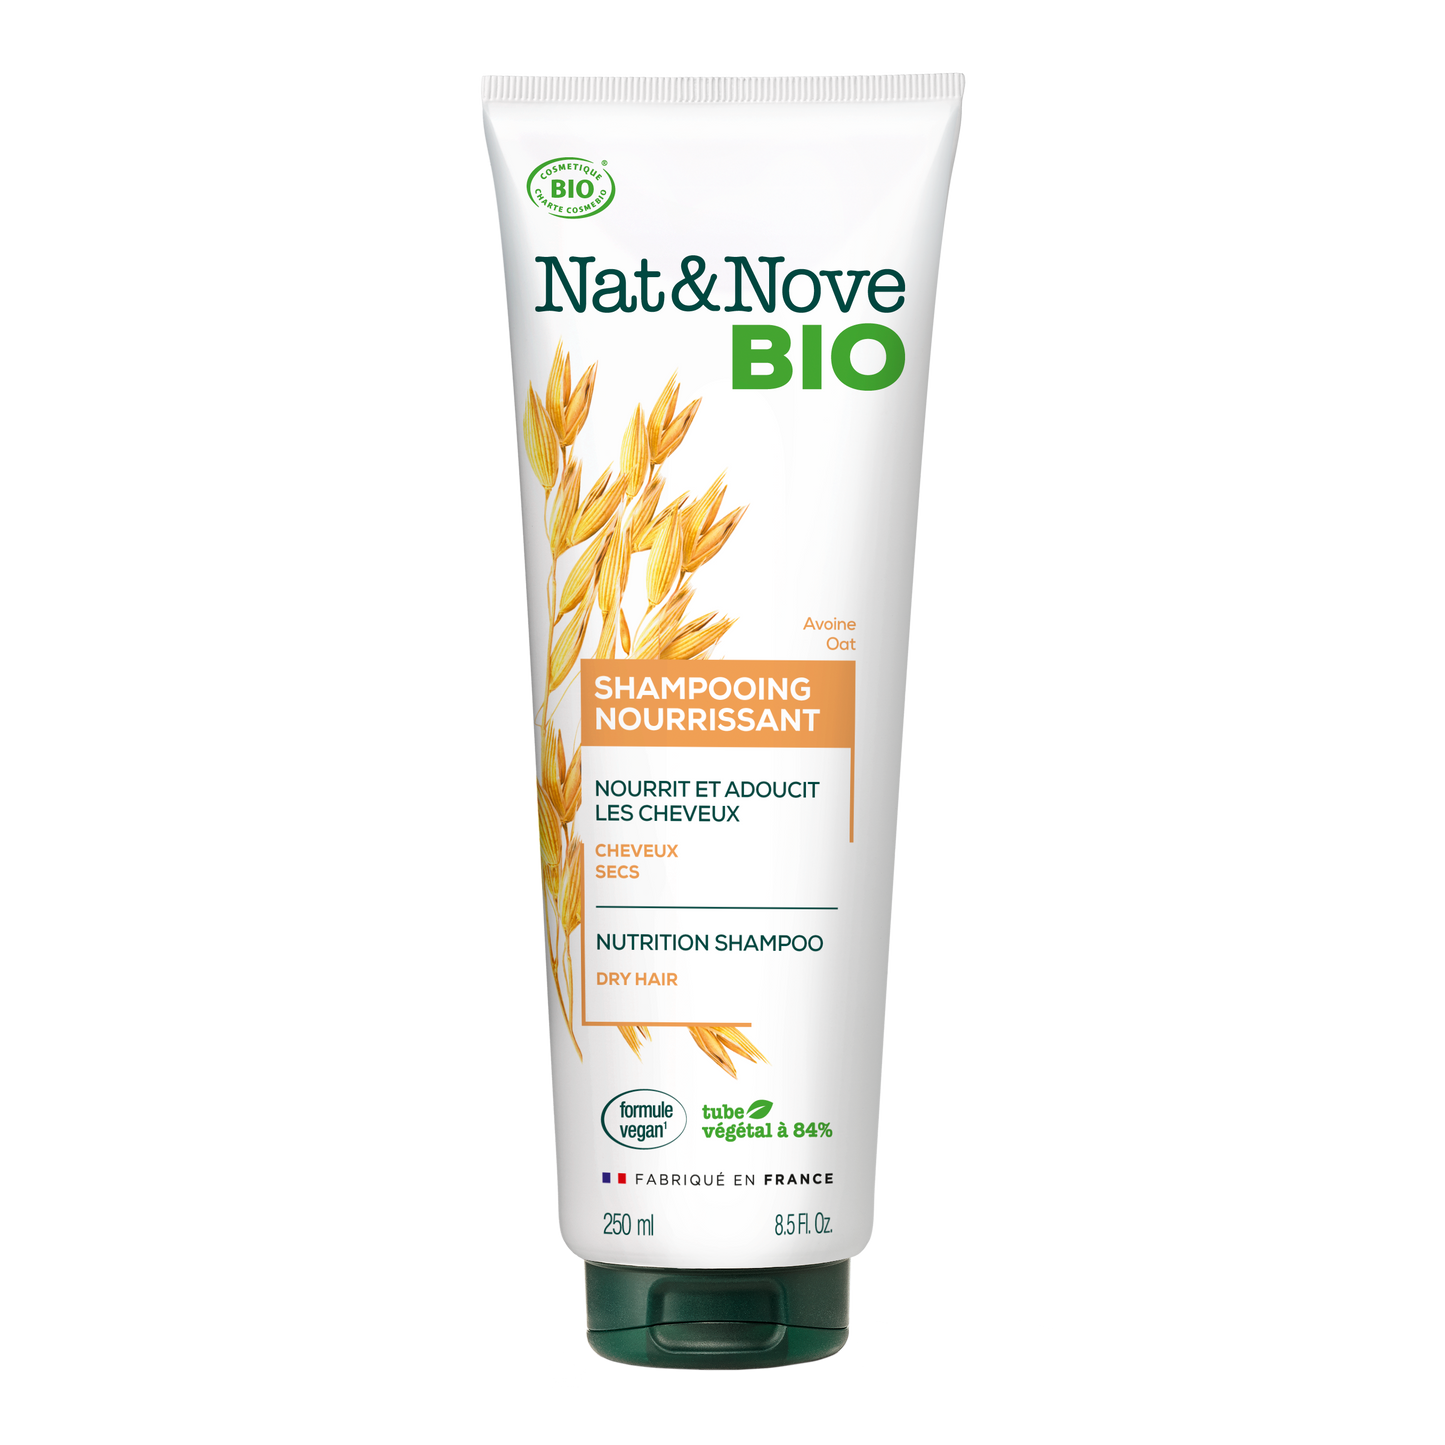 Nat & Nove Bio - Dry Hair Nutrition Shampoo - Σαμπουάν θρέψης με βρώμη για ξηρά μαλλιά